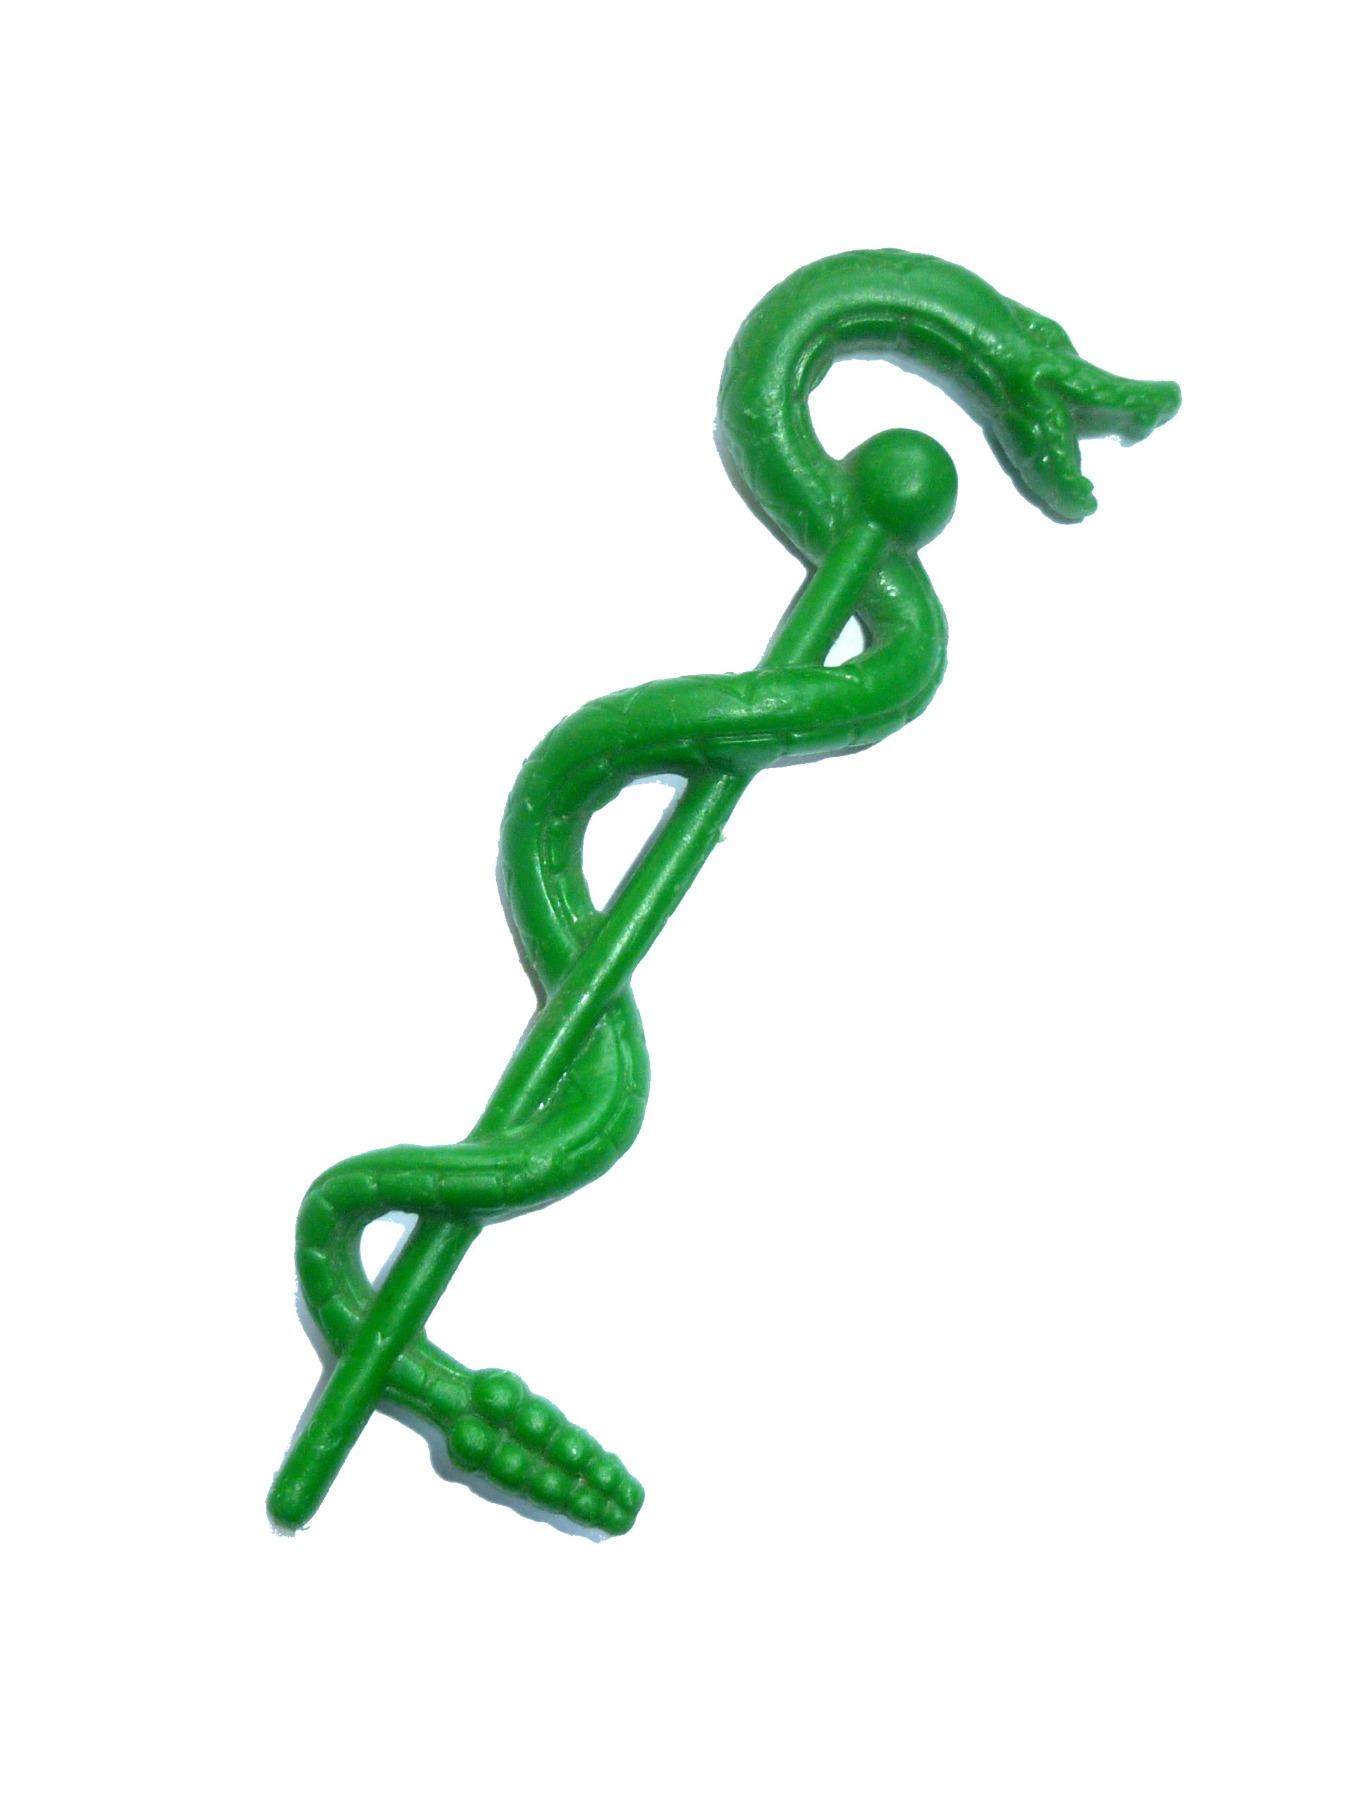 Snake Face snake staff / weapon